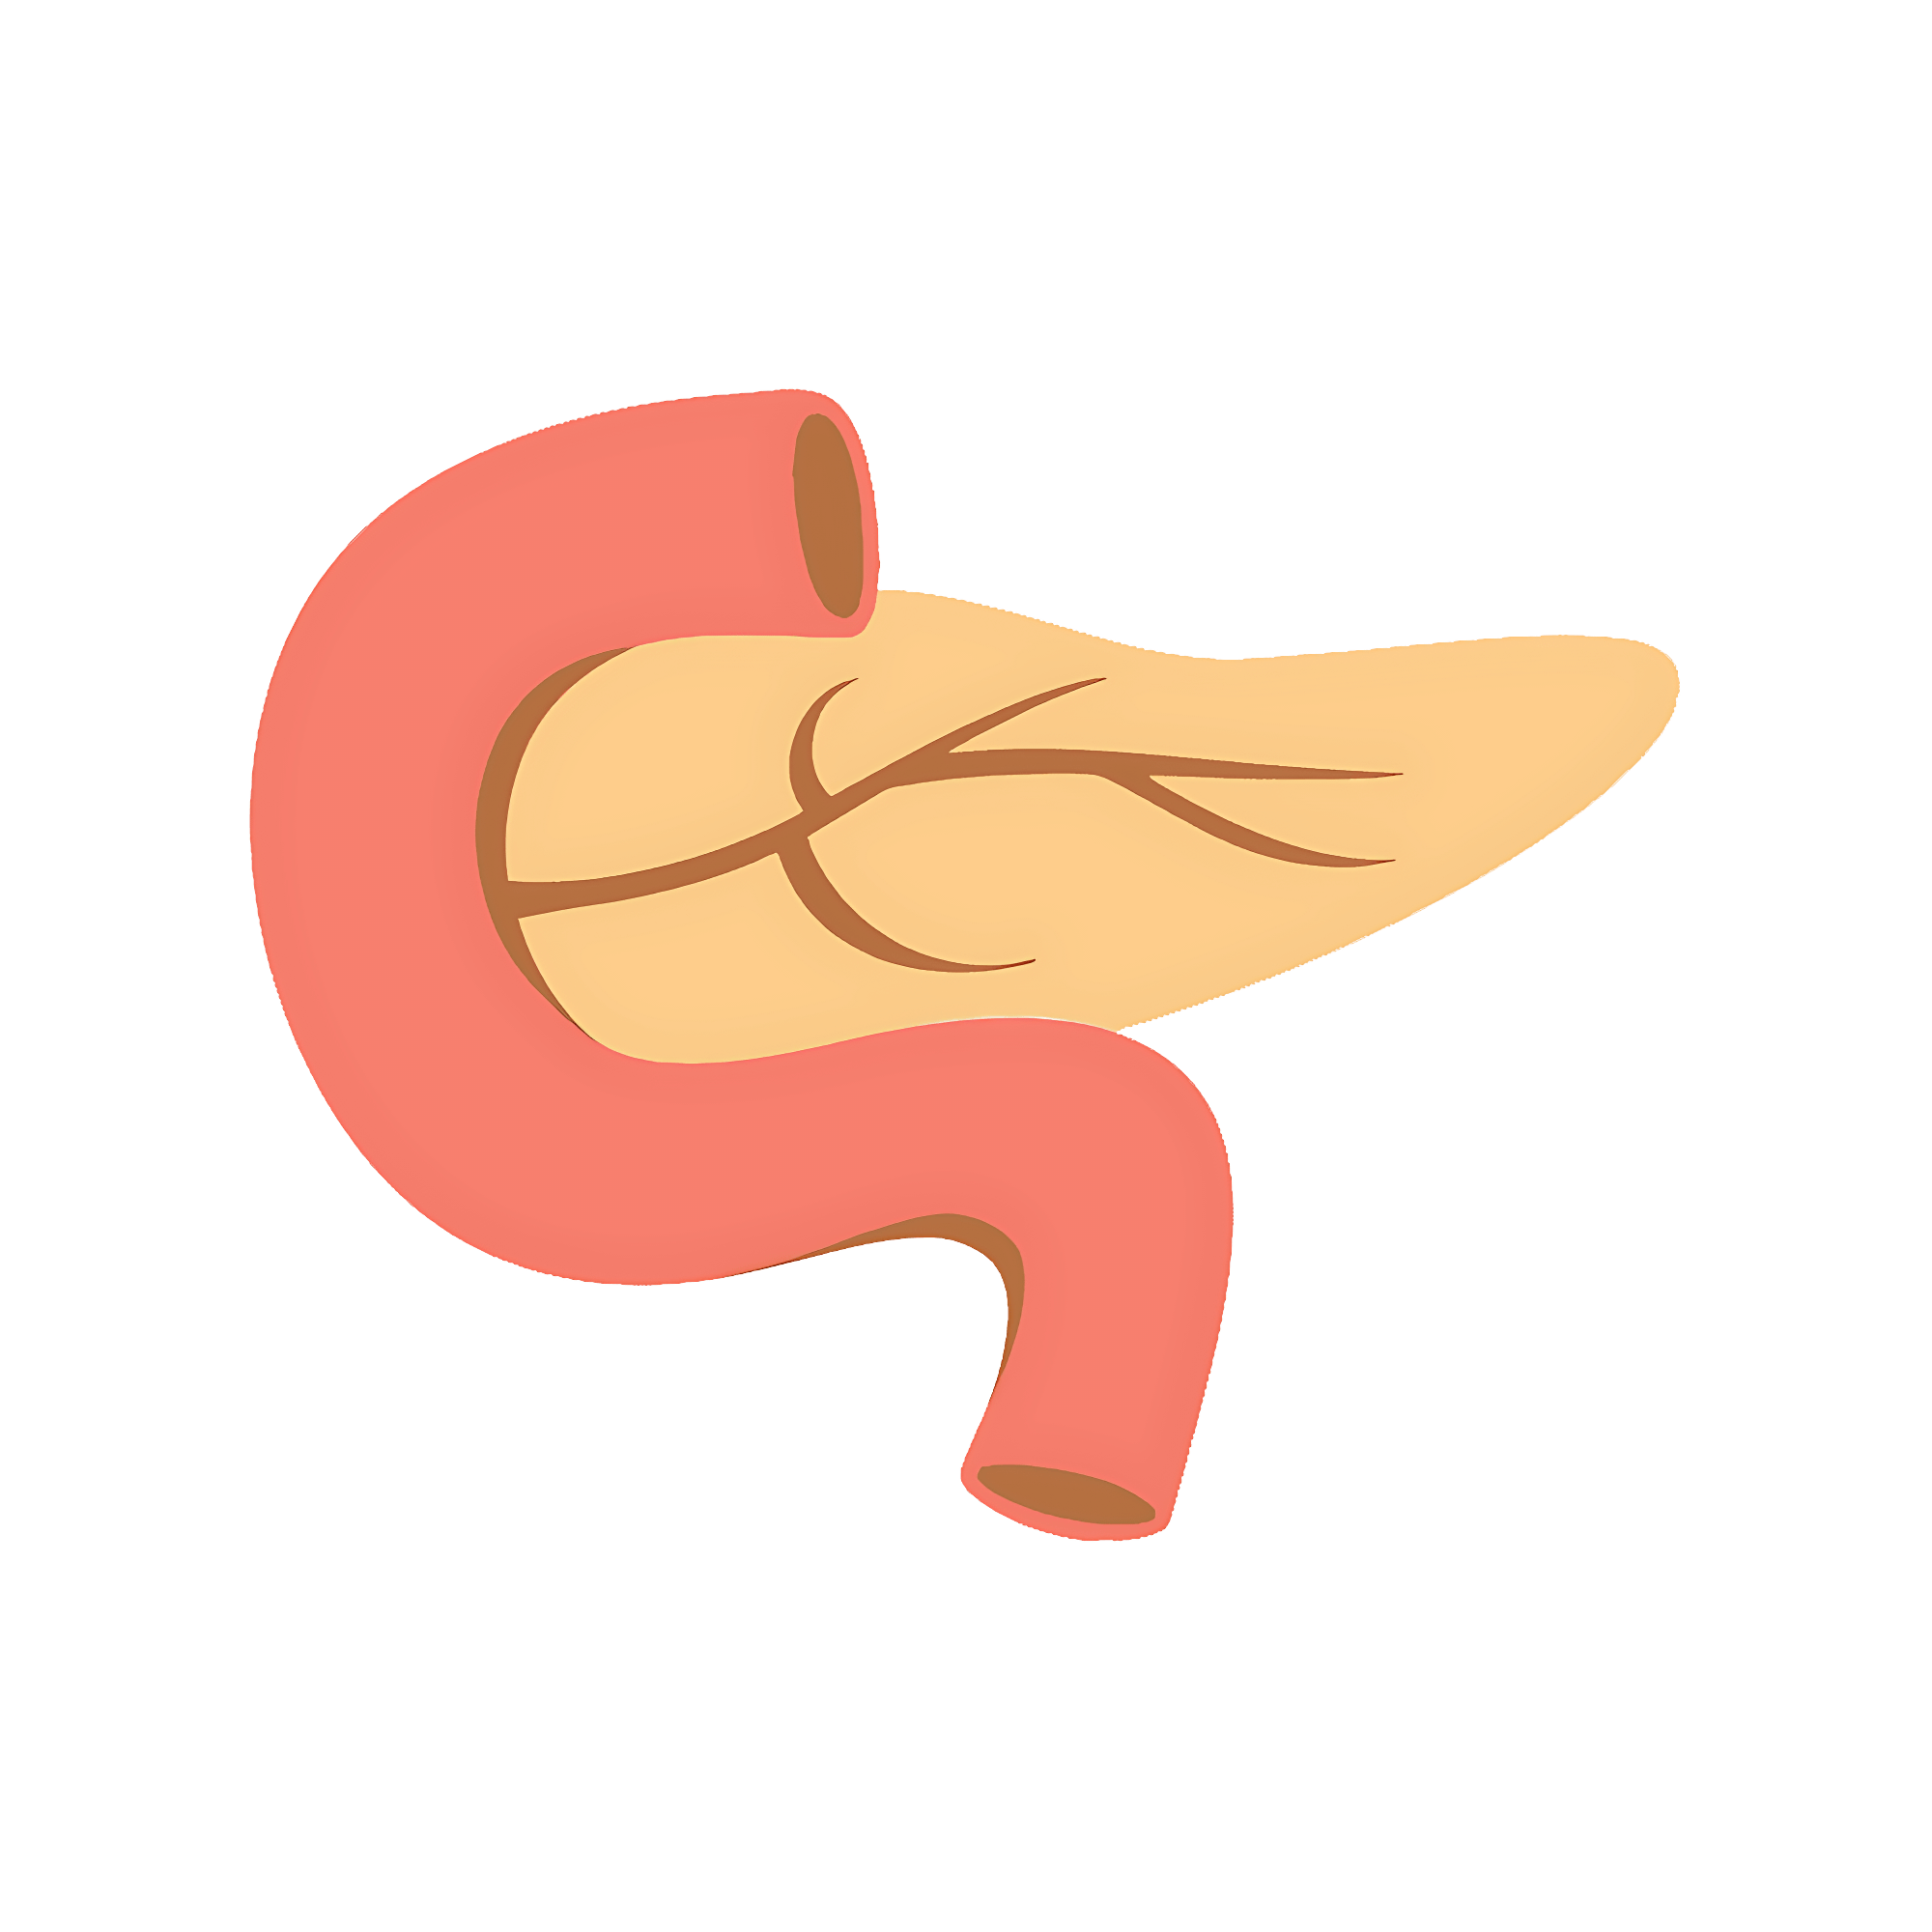 Pancreas Transparent Image